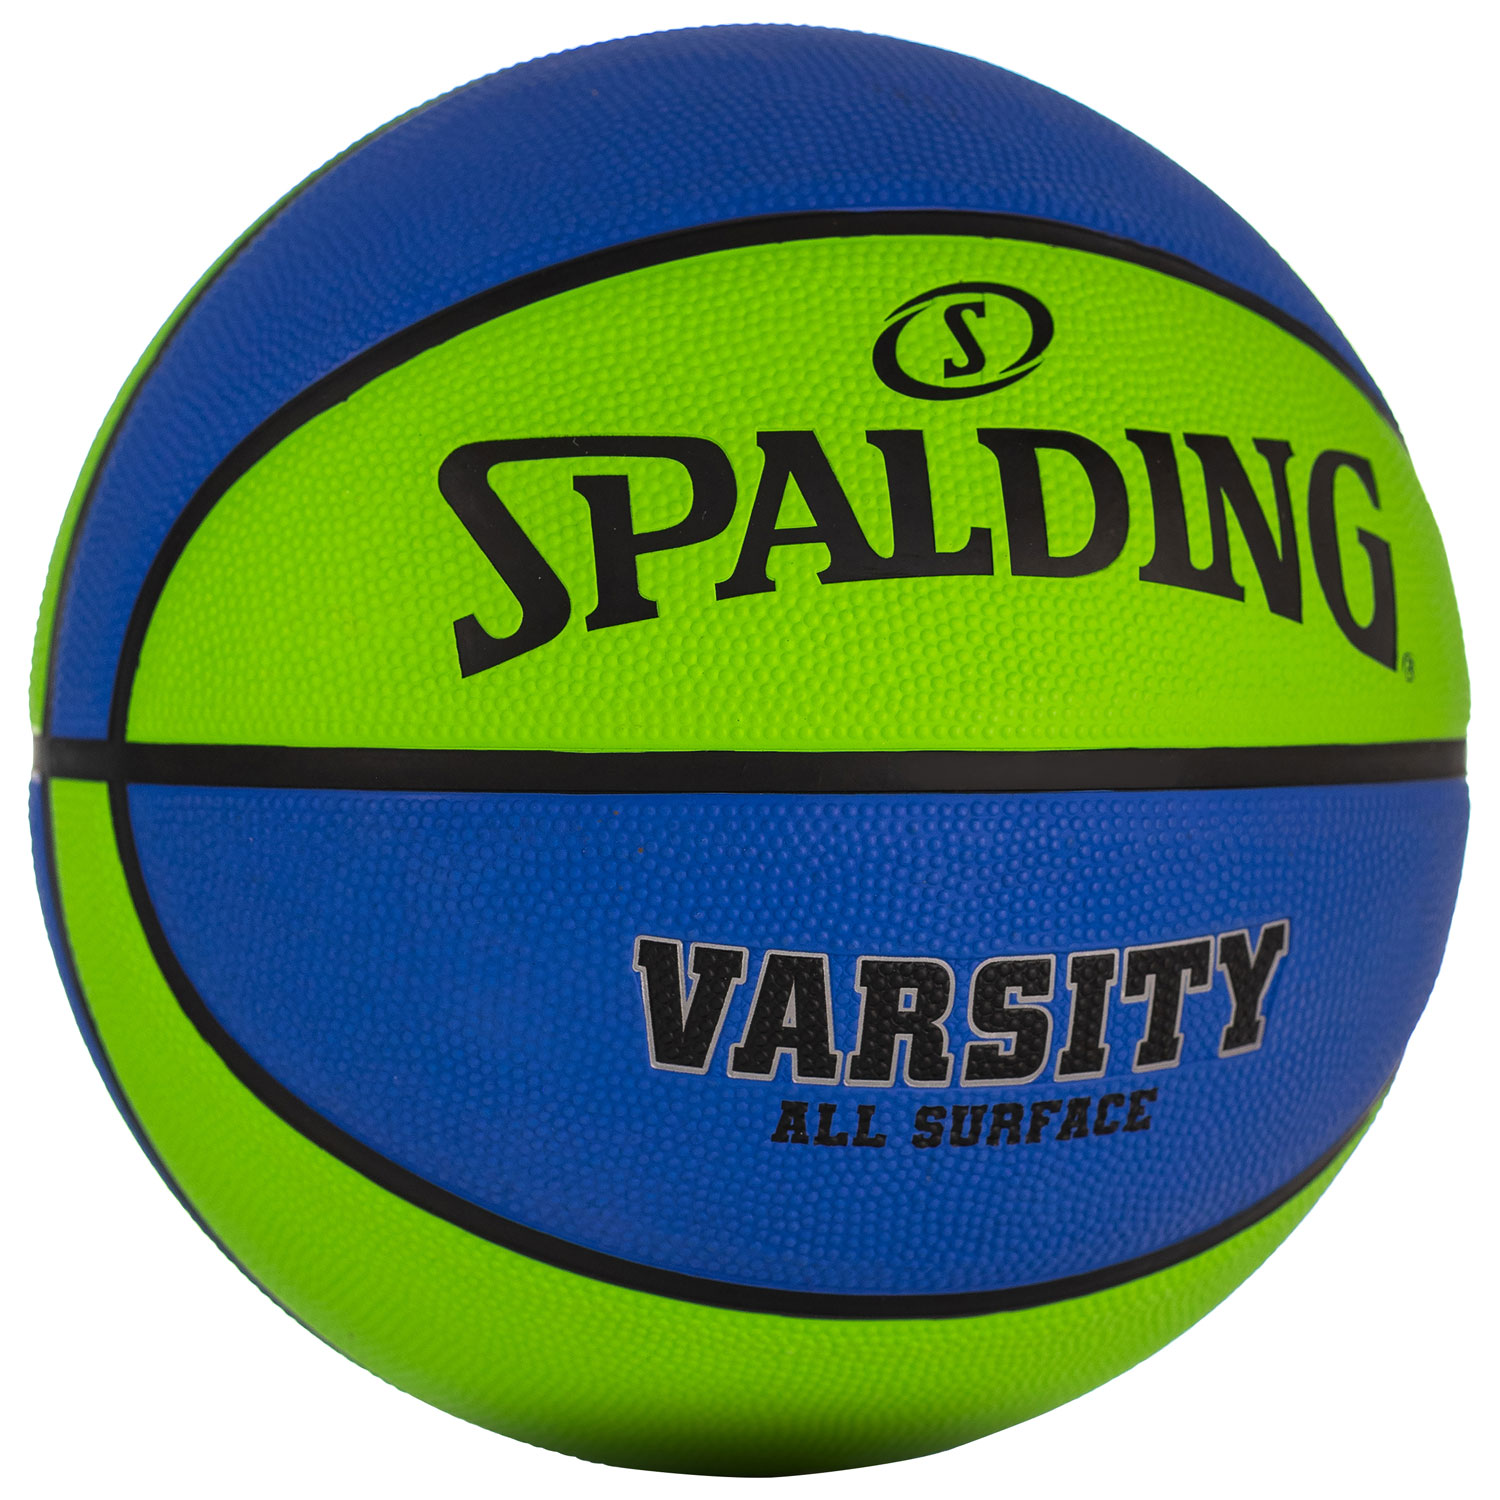 Spalding Varsity Rubber Outdoor Size 7 (29.5") Basketball - Blue/Green